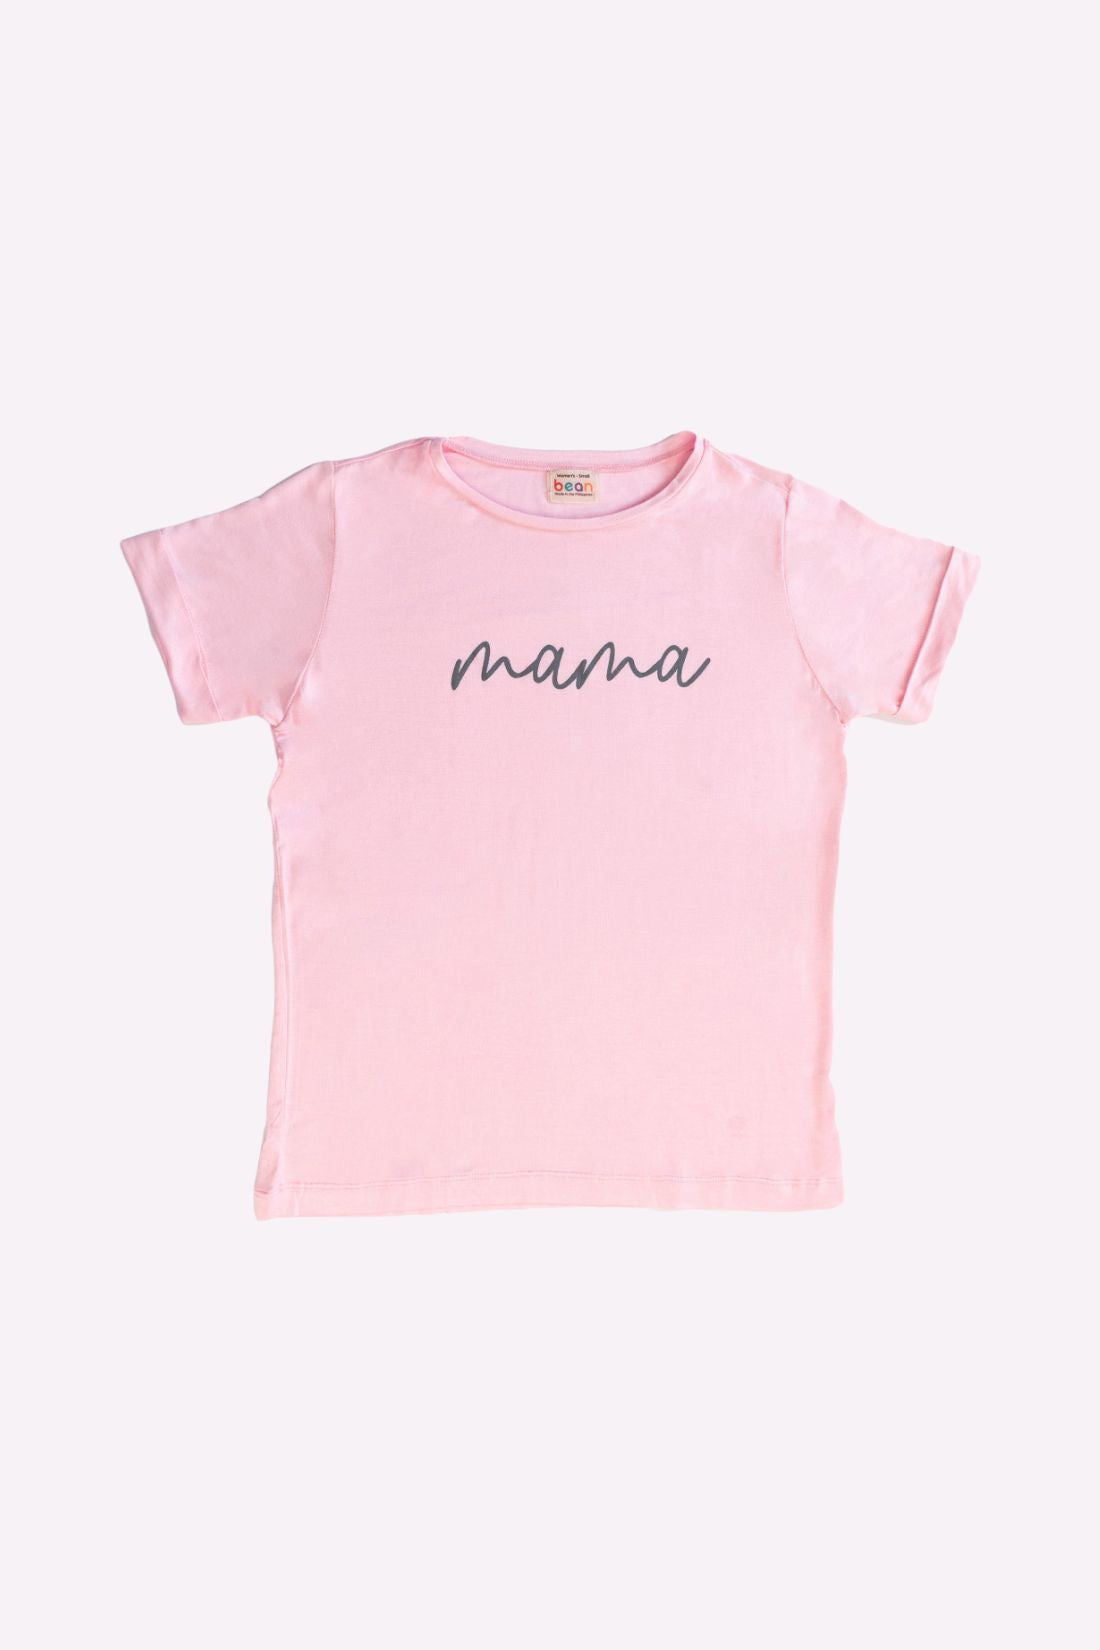 Carnation Pink Mama Shirt